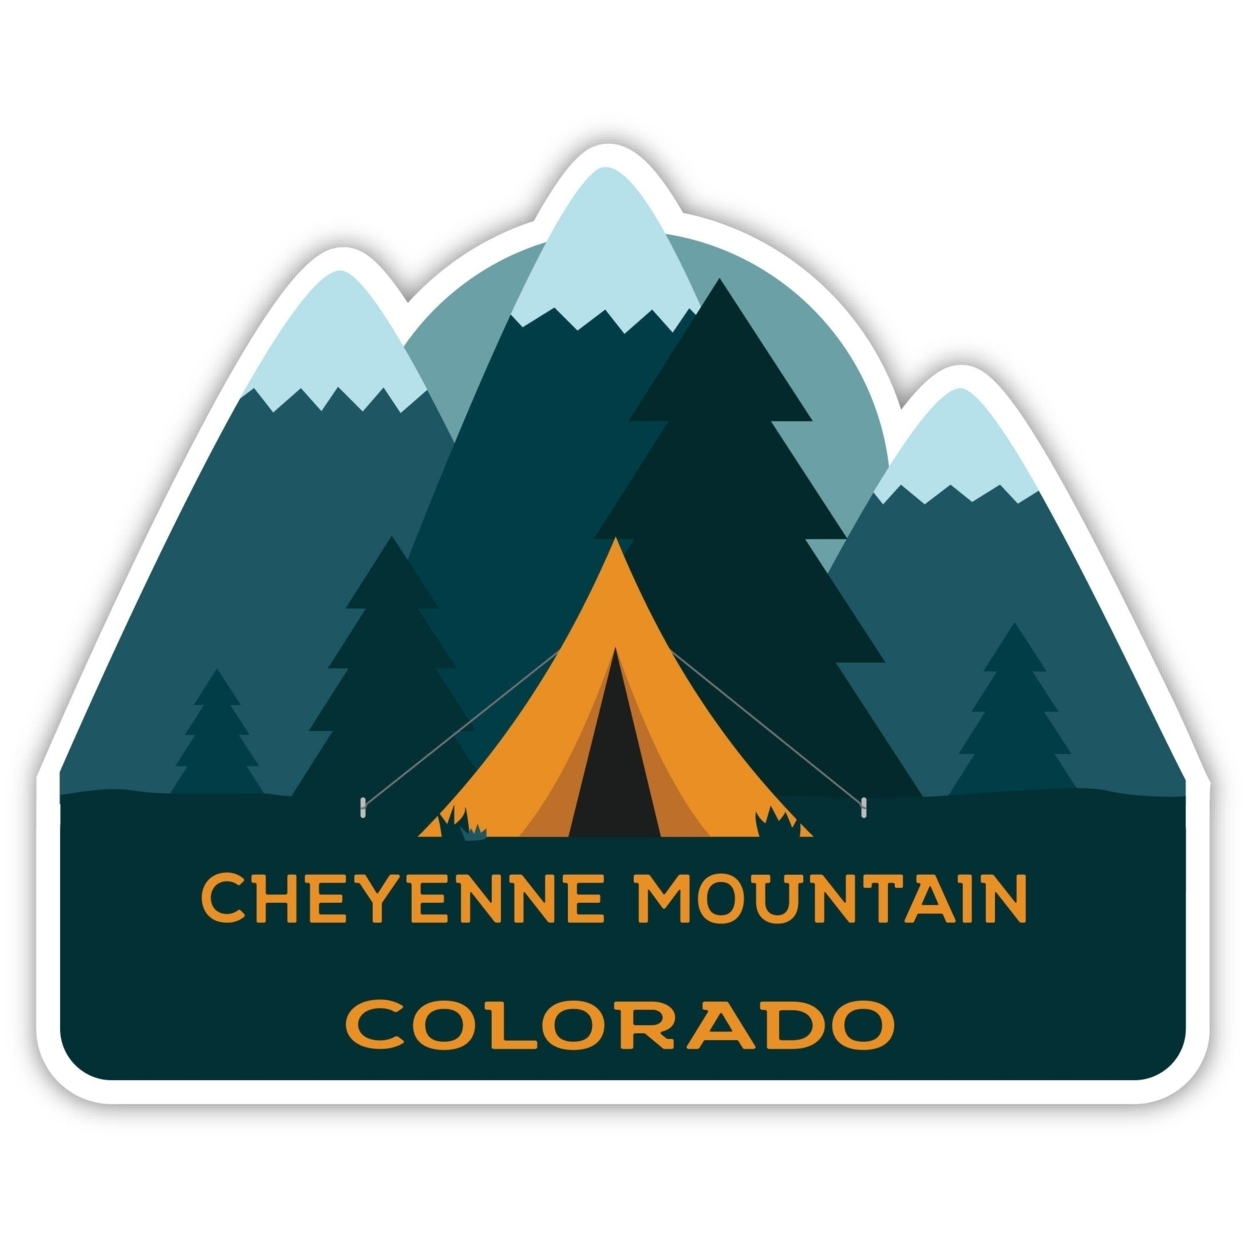 Cheyenne Mountain Colorado Souvenir Decorative Stickers (Choose Theme And Size) - Single Unit, 12-Inch, Tent